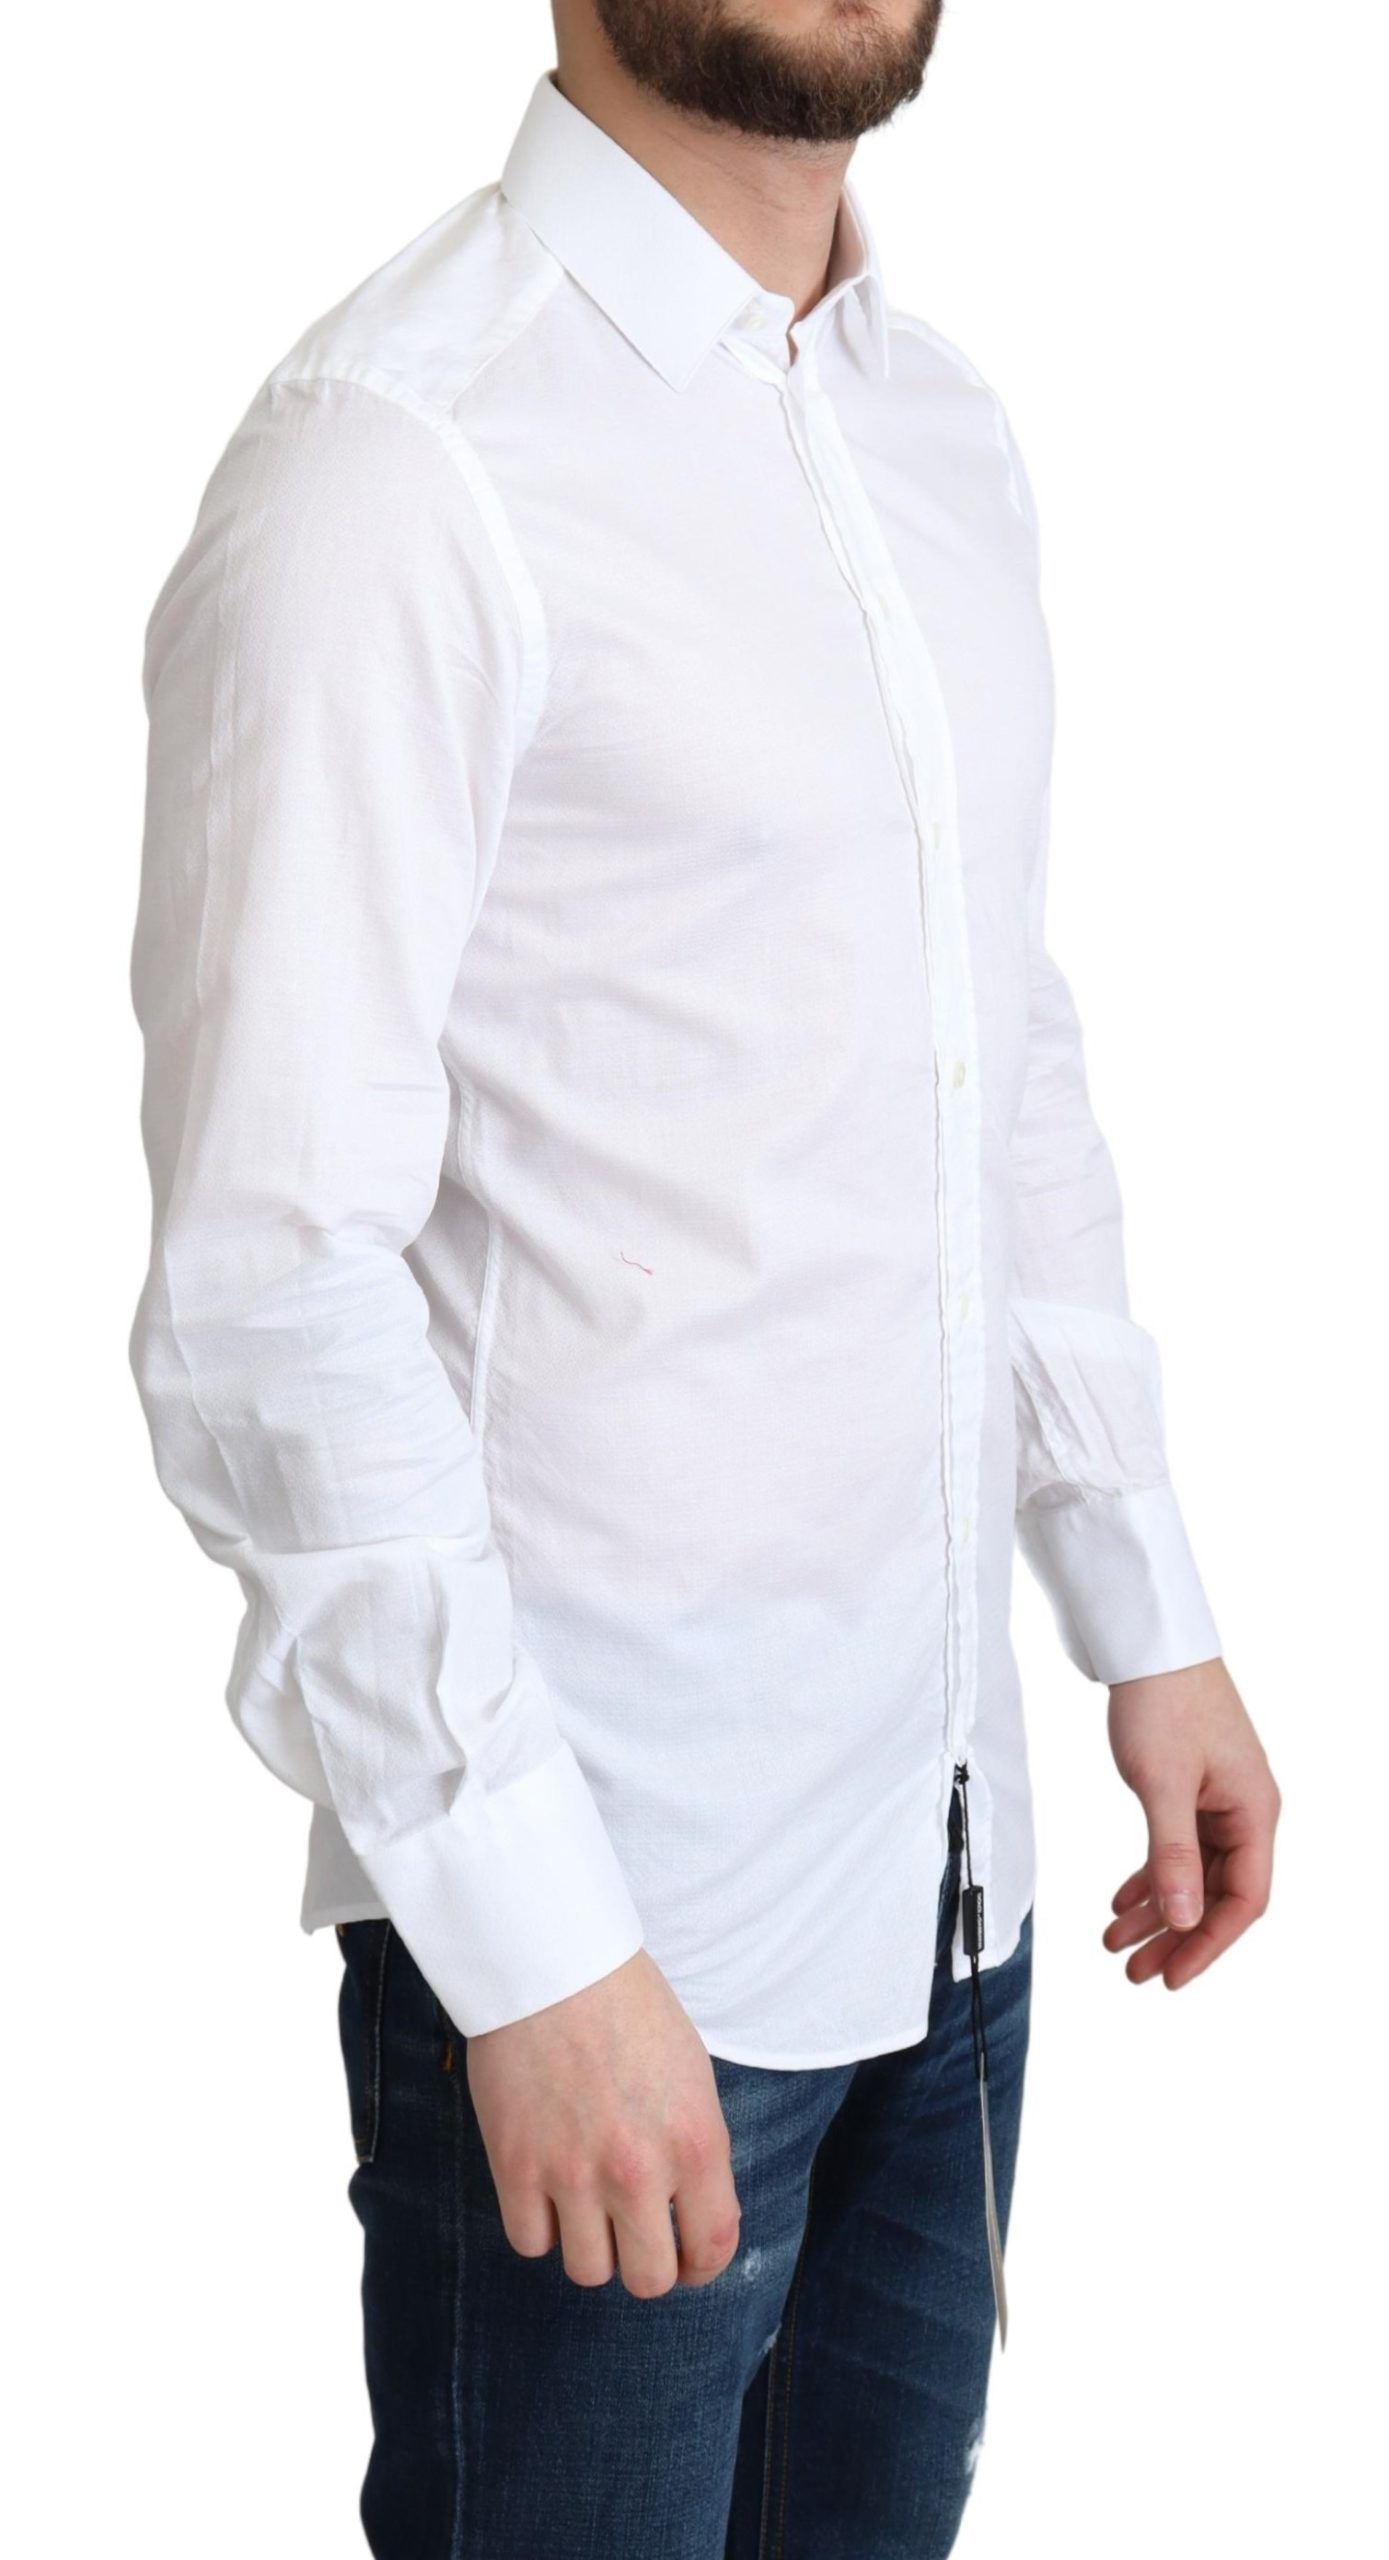 Elegant White Cotton Dress Shirt Slim Fit